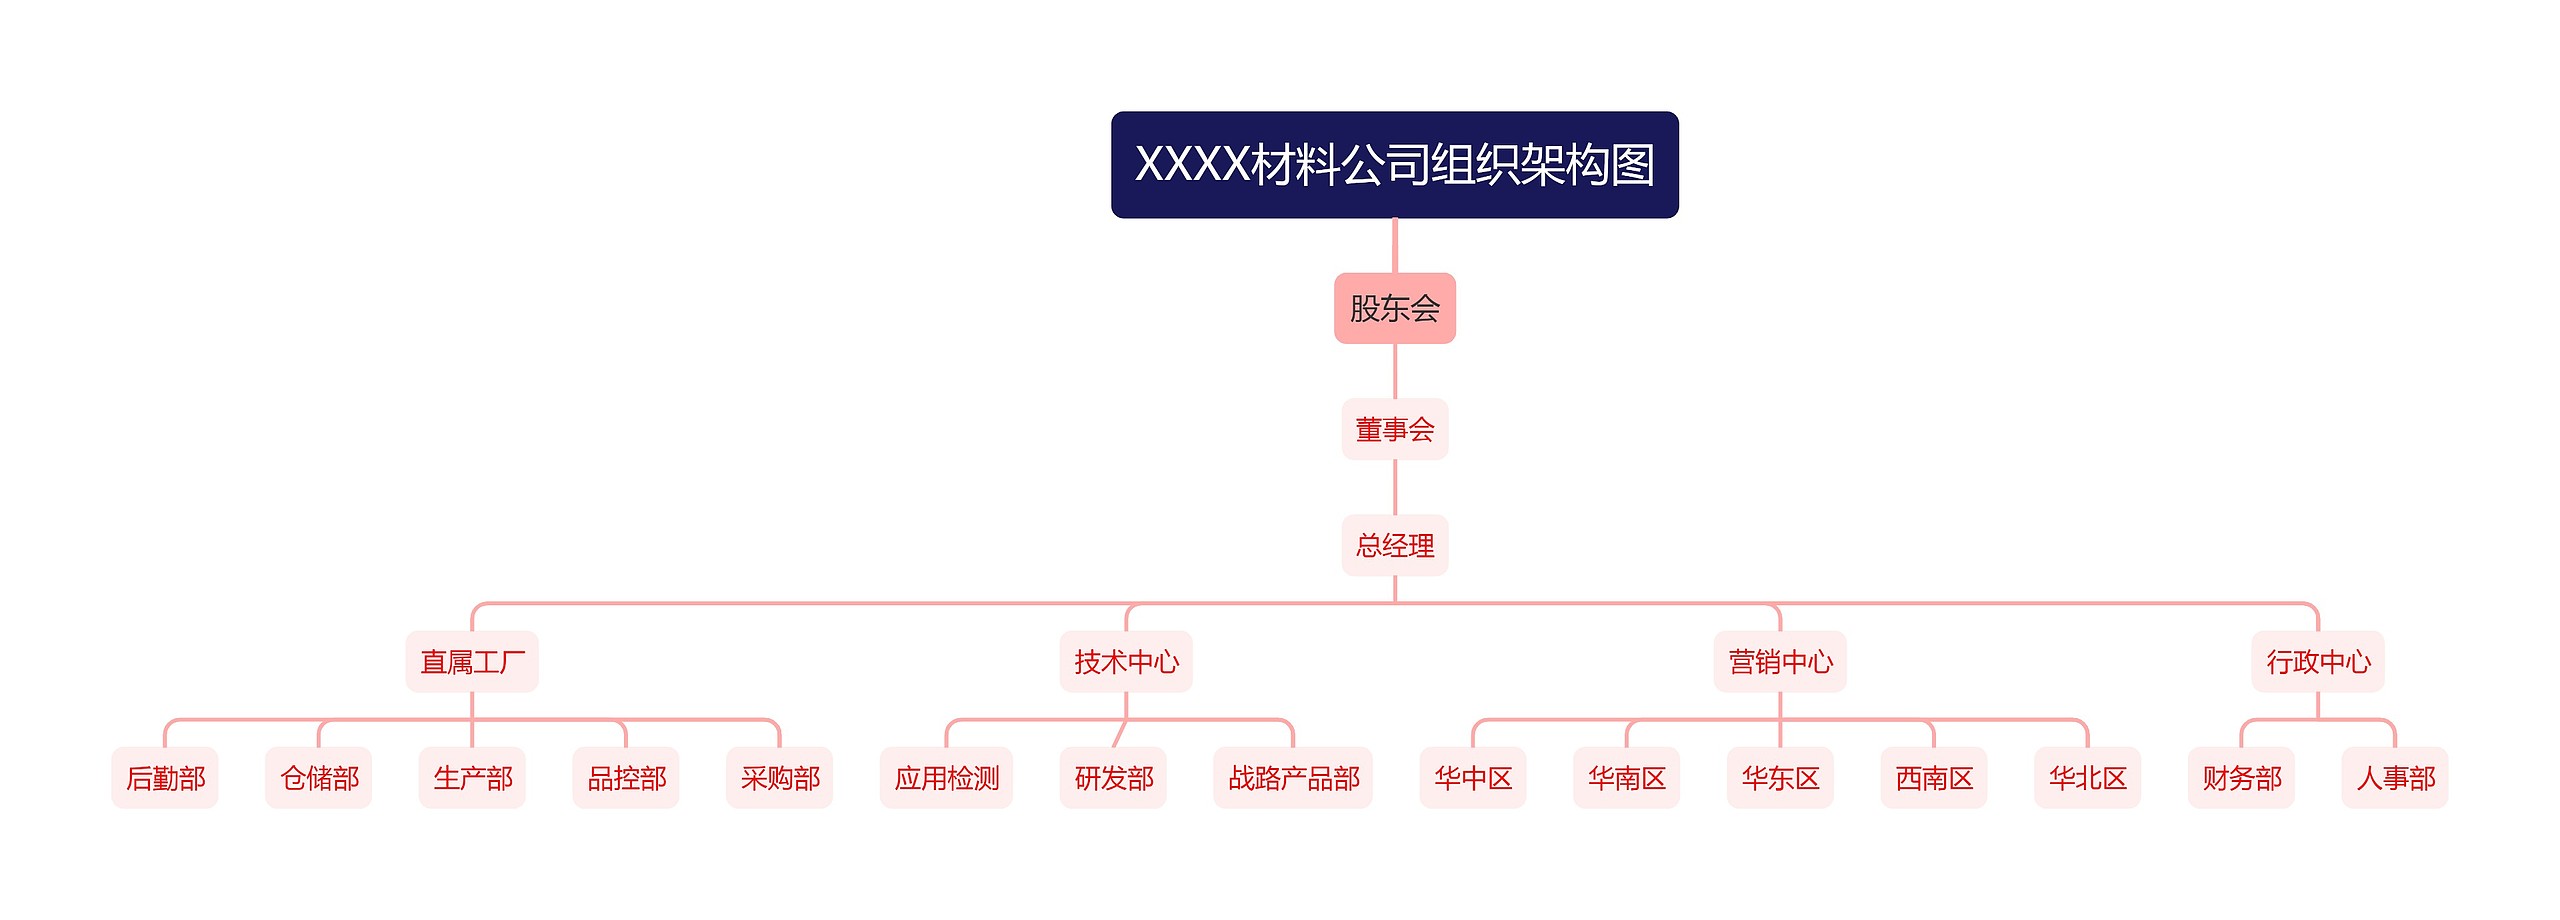 XXXX材料公司组织架构图